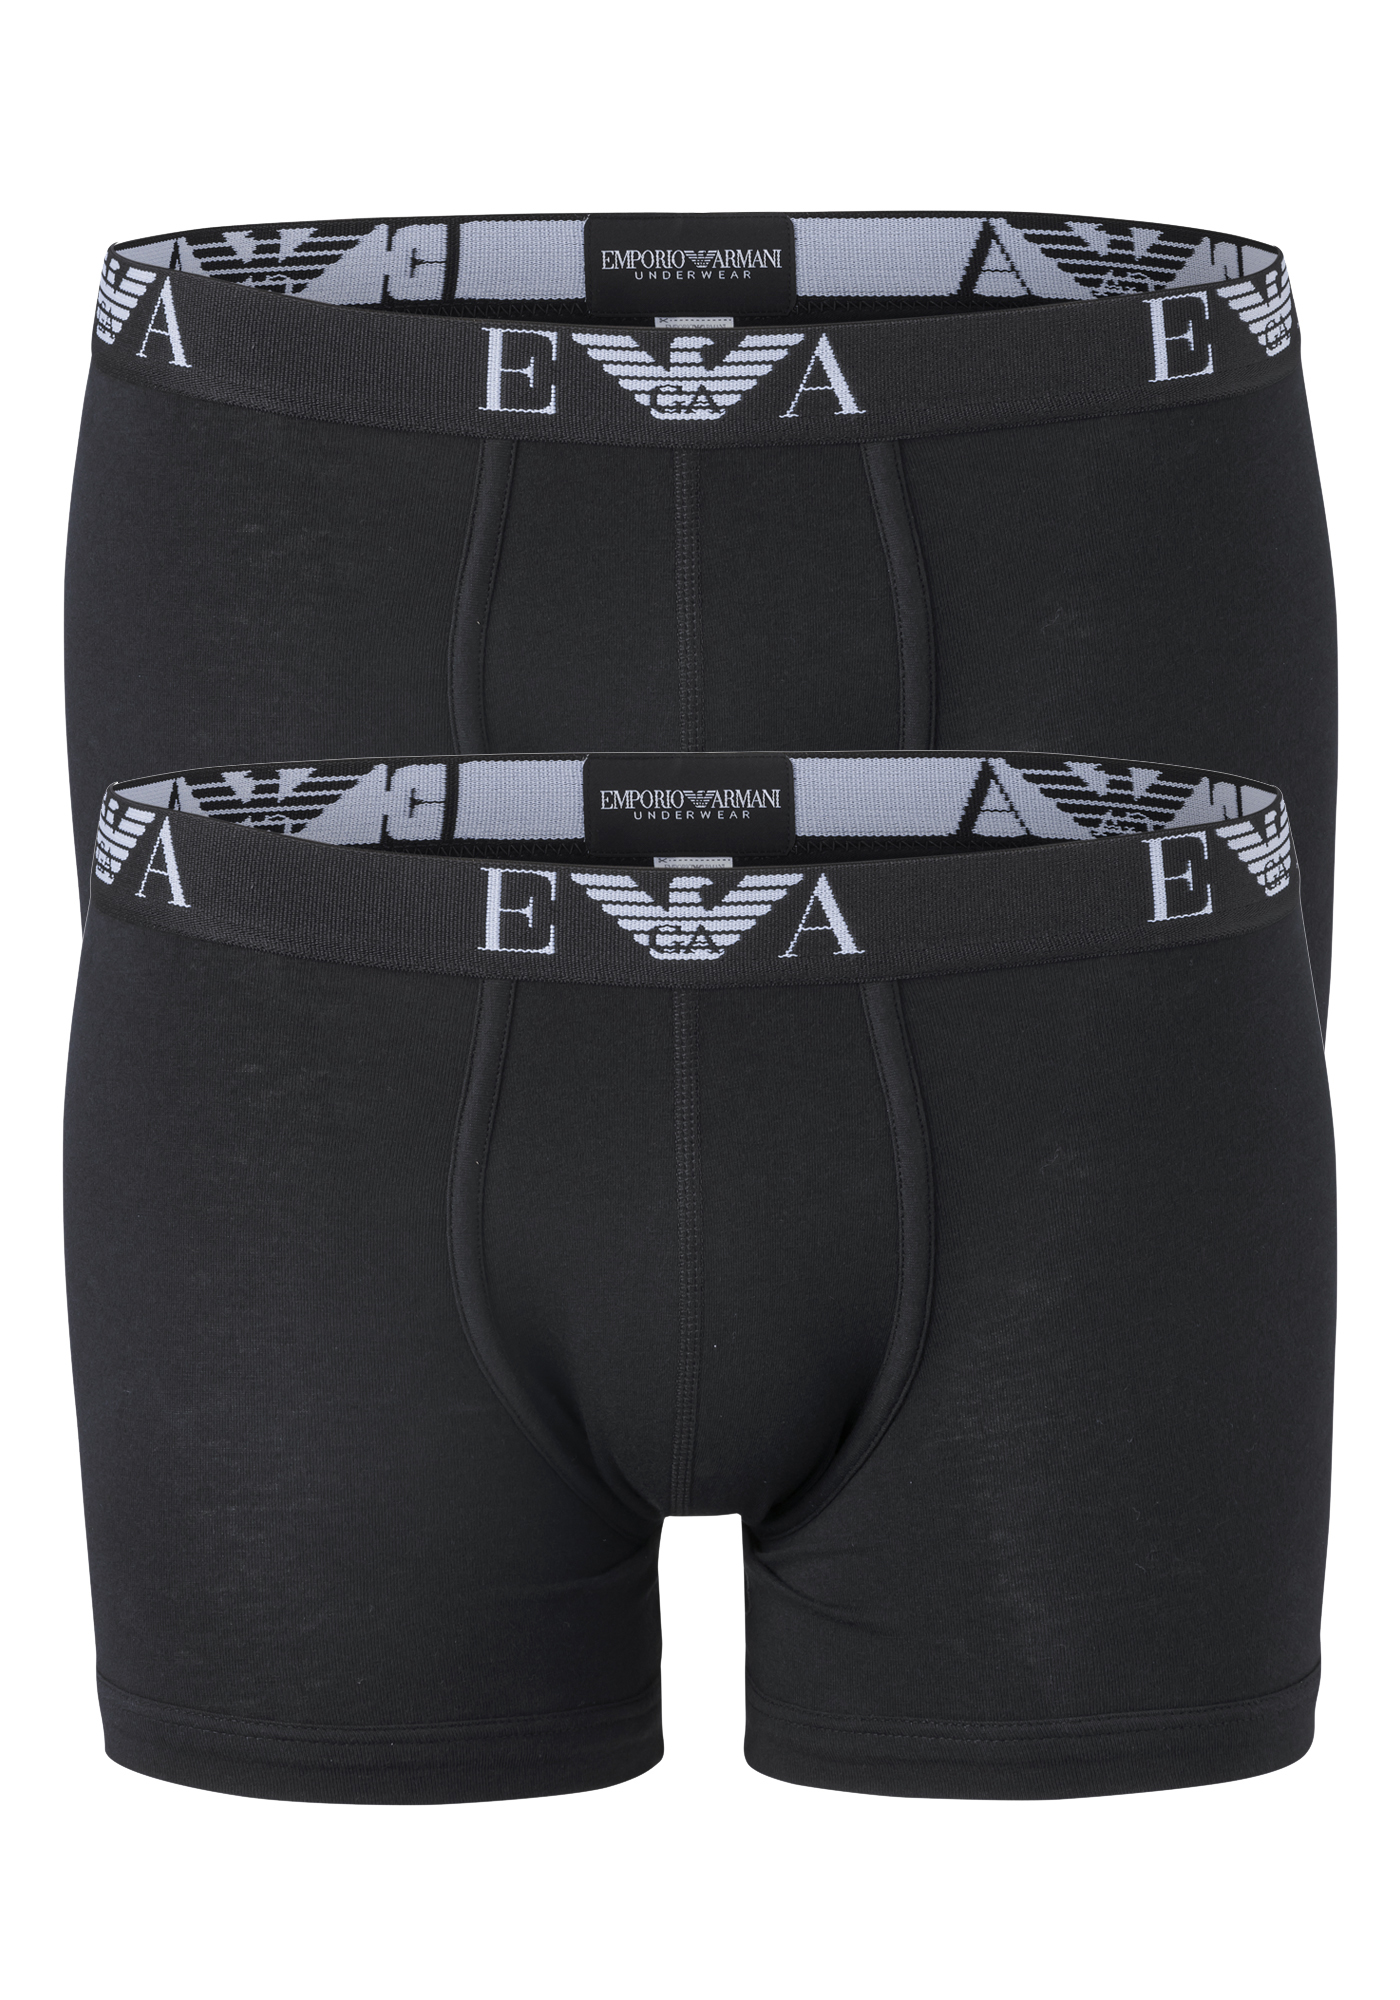 Emporio Armani Boxers Essential Monogram (2-pack), heren boxers normale lengte, zwart